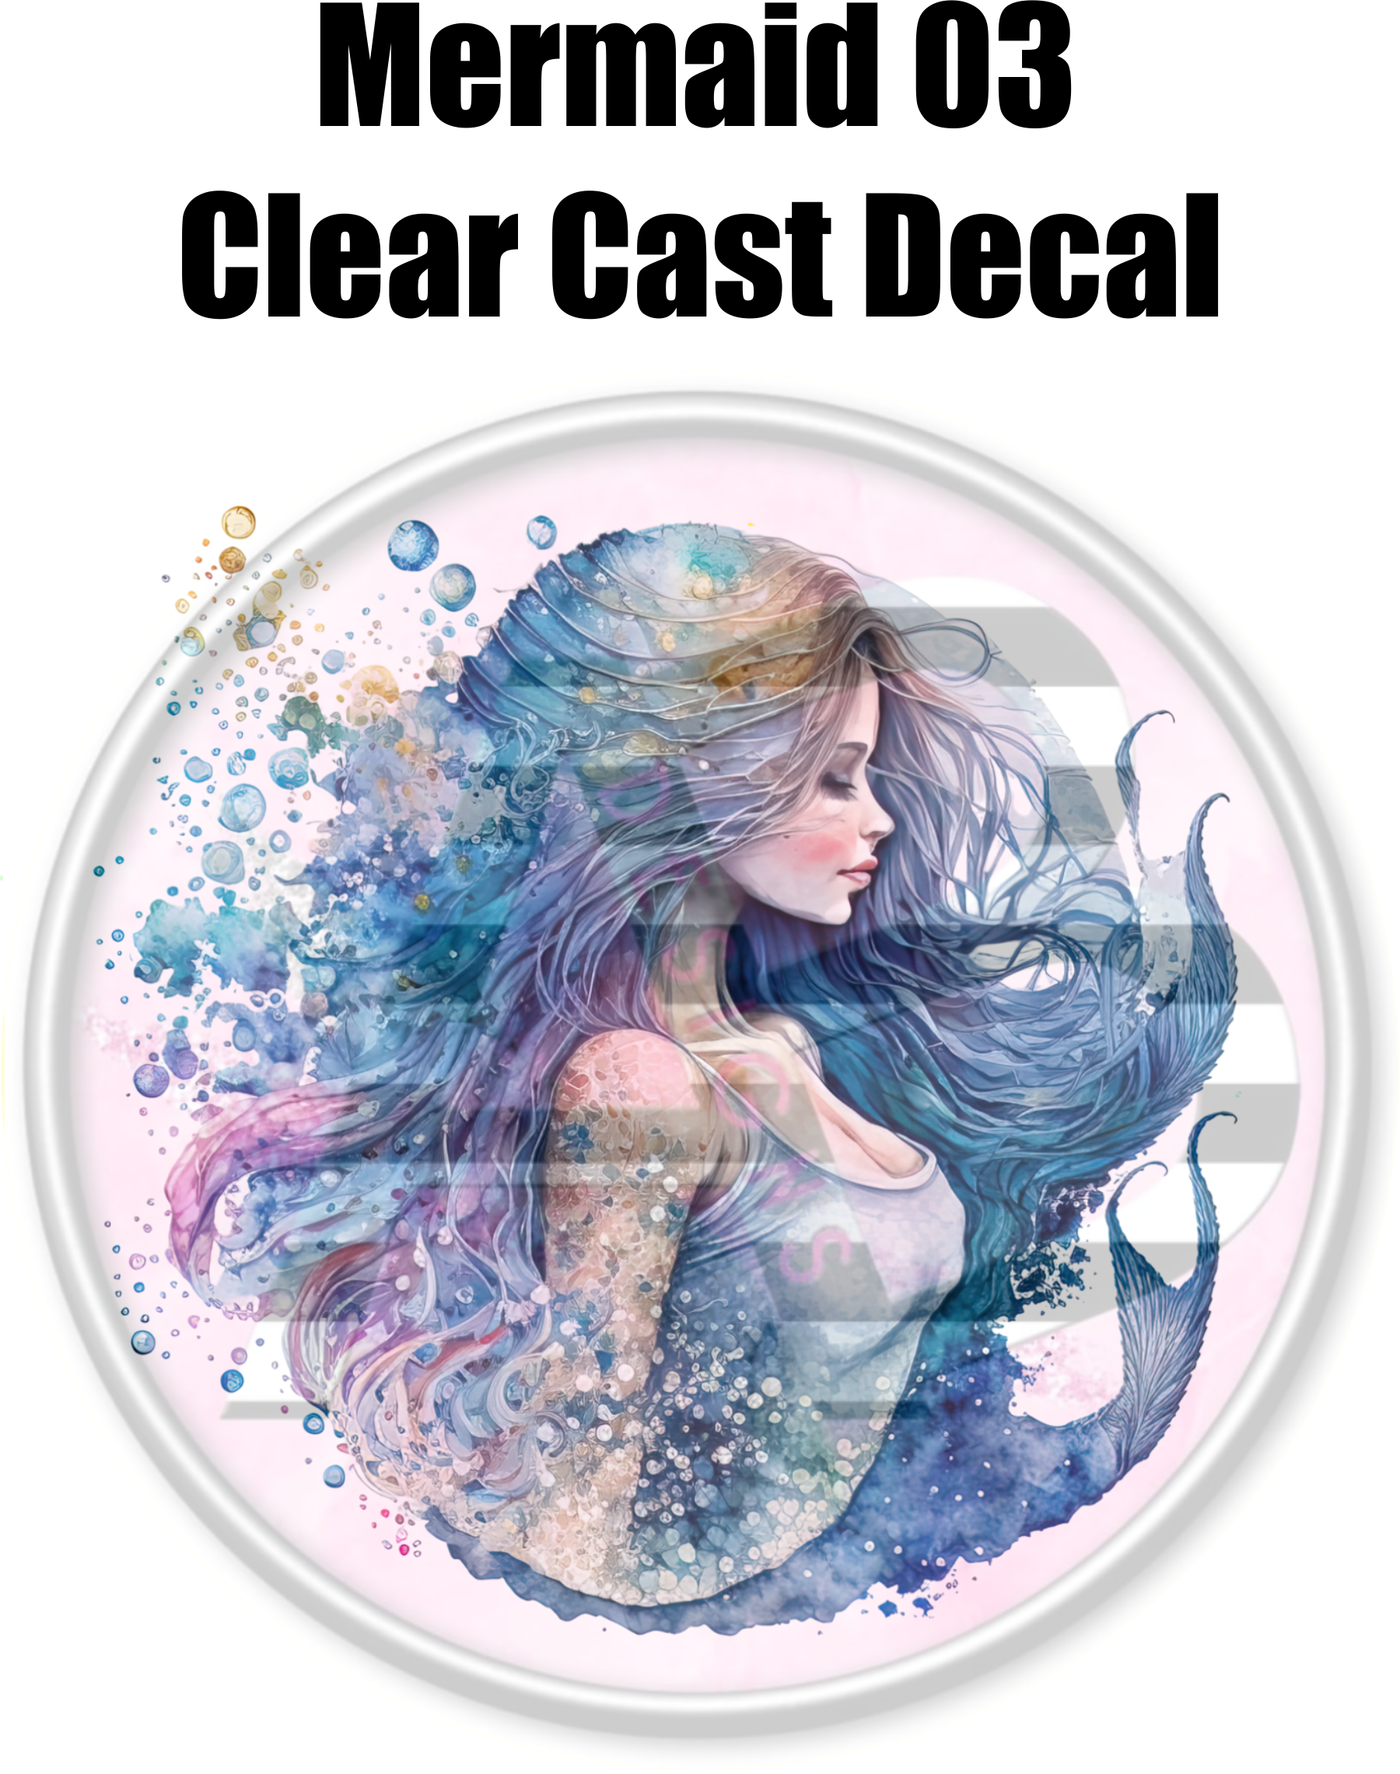 Mermaid 03 - Clear Cast Decal